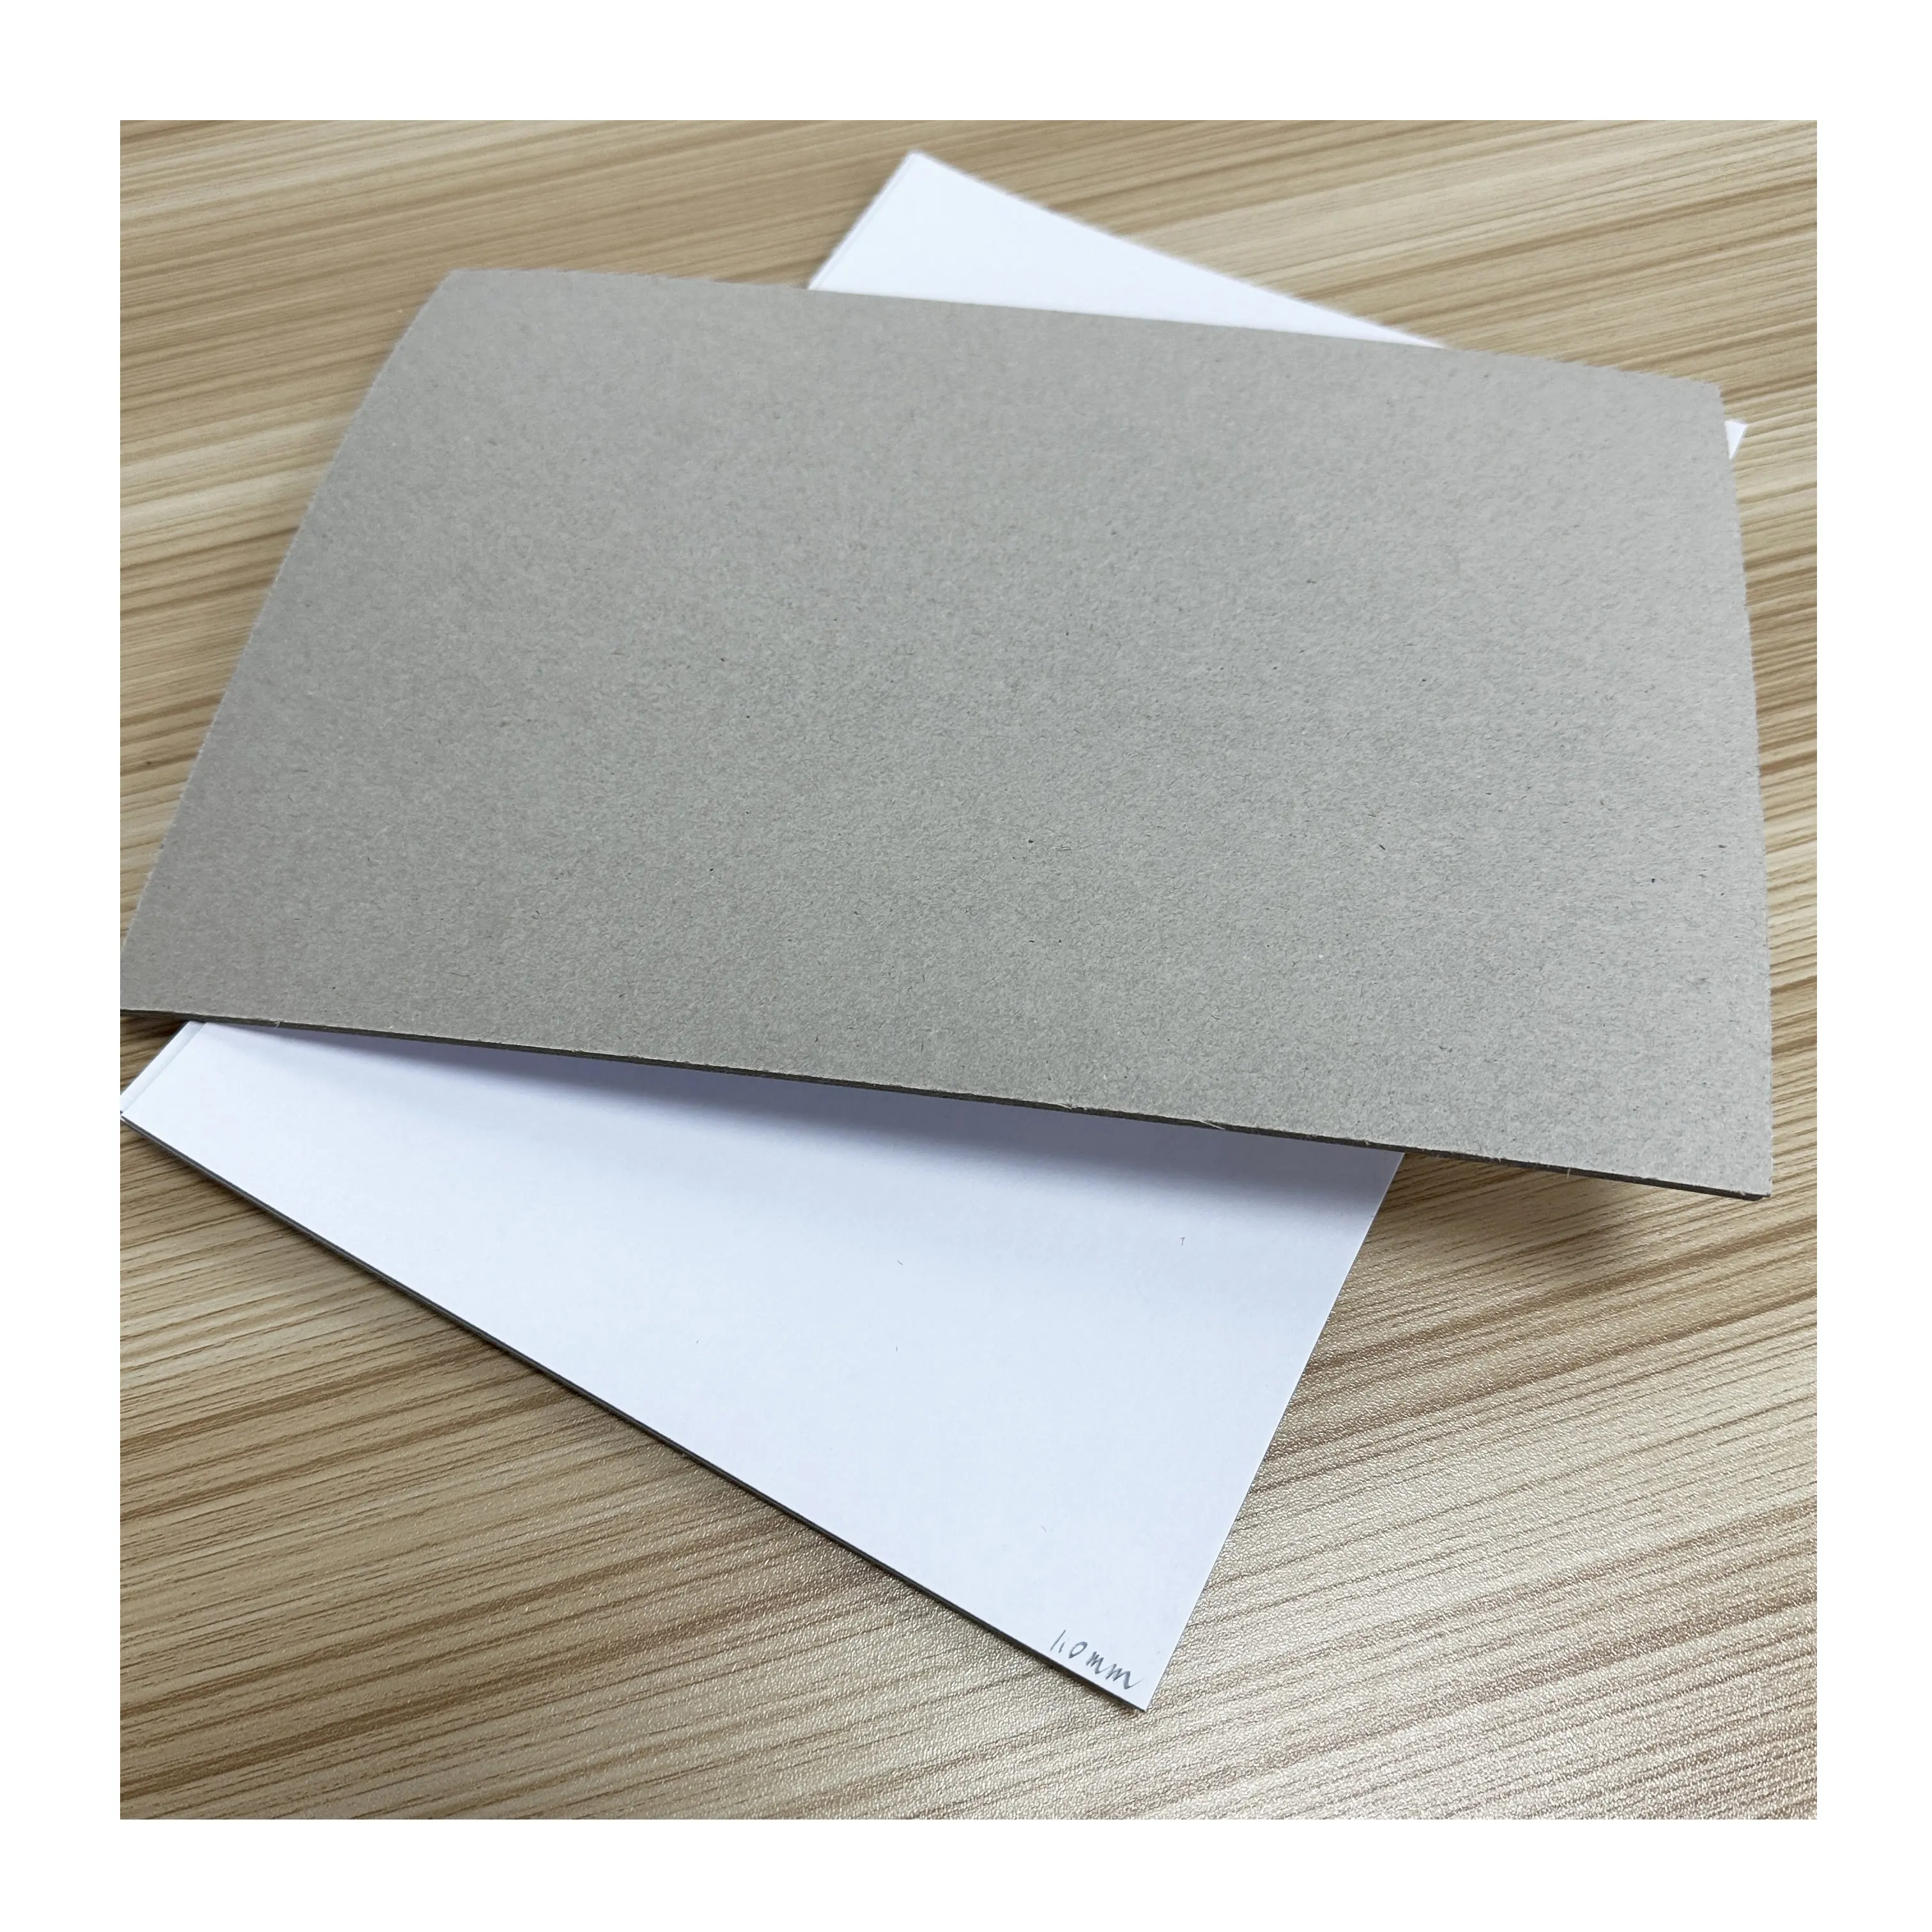 Tablero de papel doble recubierto, 250gsm, 300gsm, 350gsm, cartón blanco con parte trasera gris